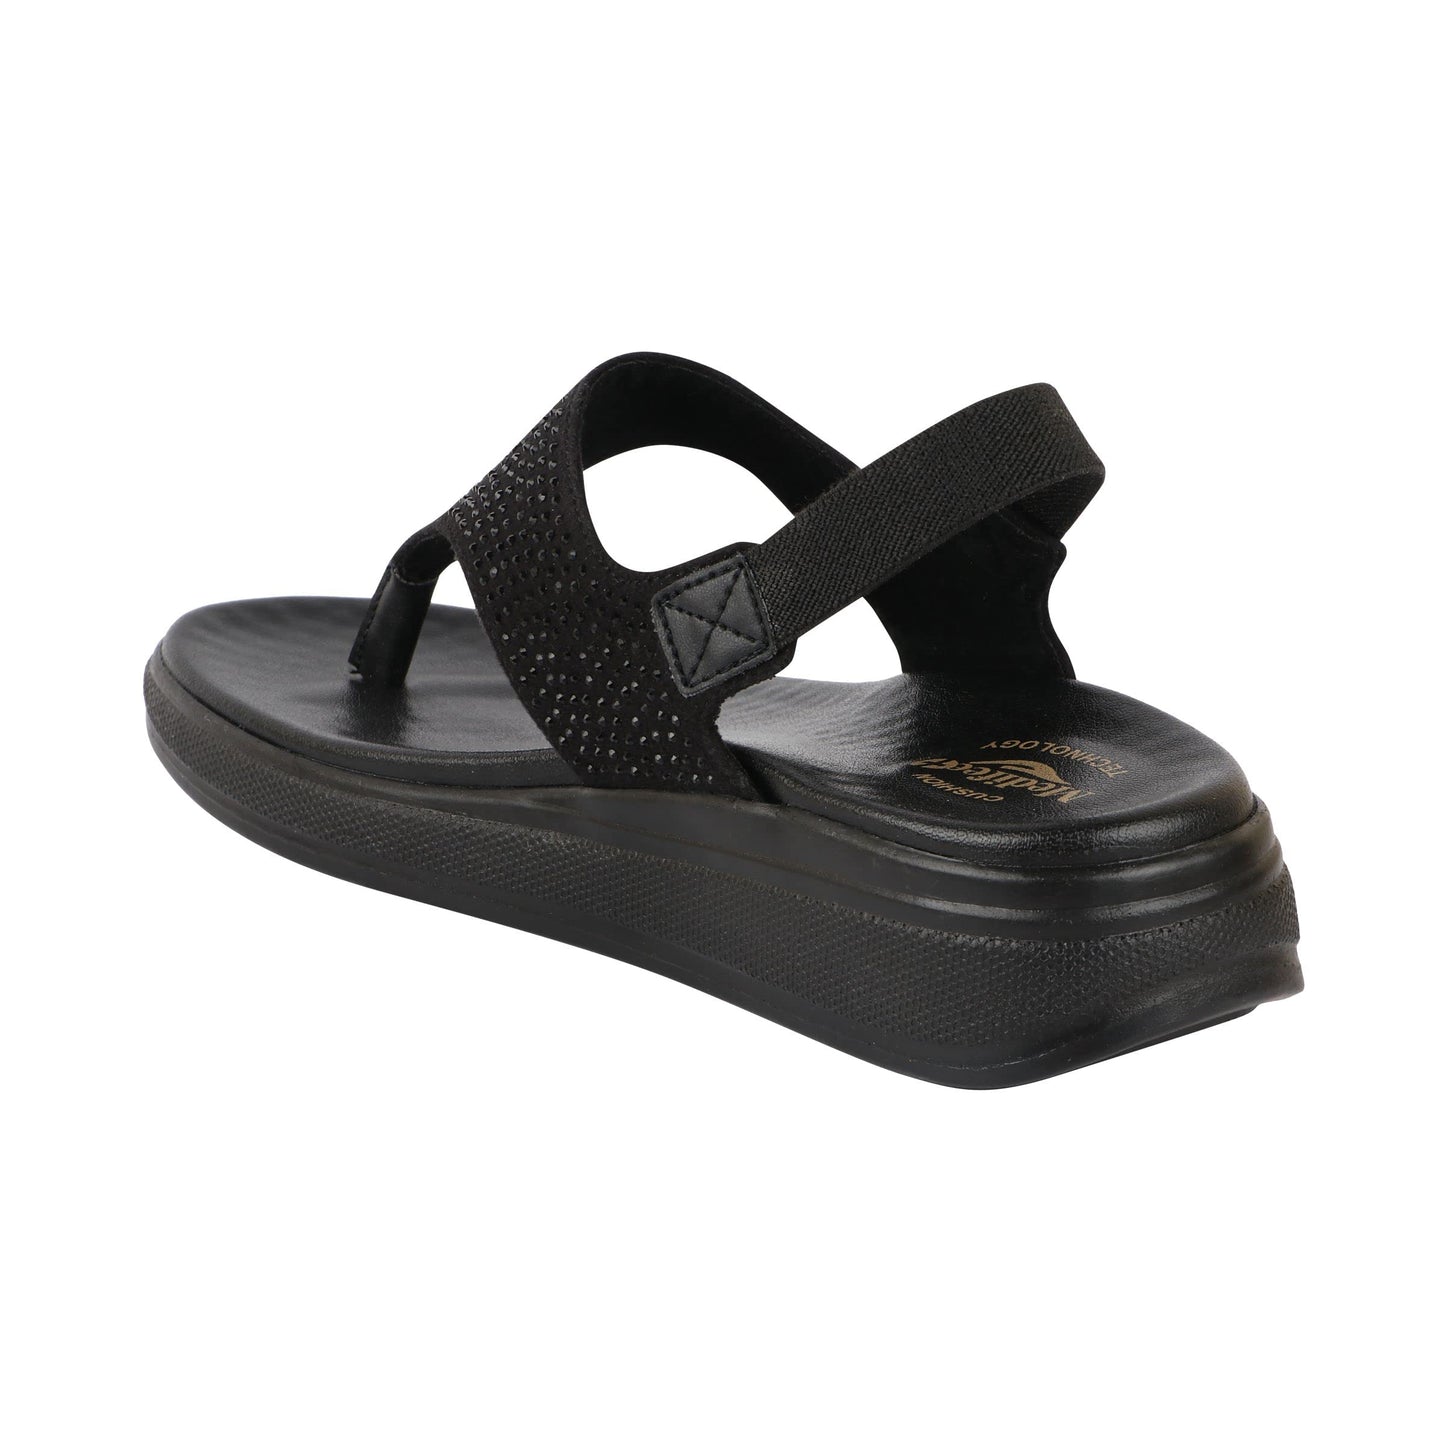 Medifeet Women's Thong with Sling Back Sandals (BLACK)